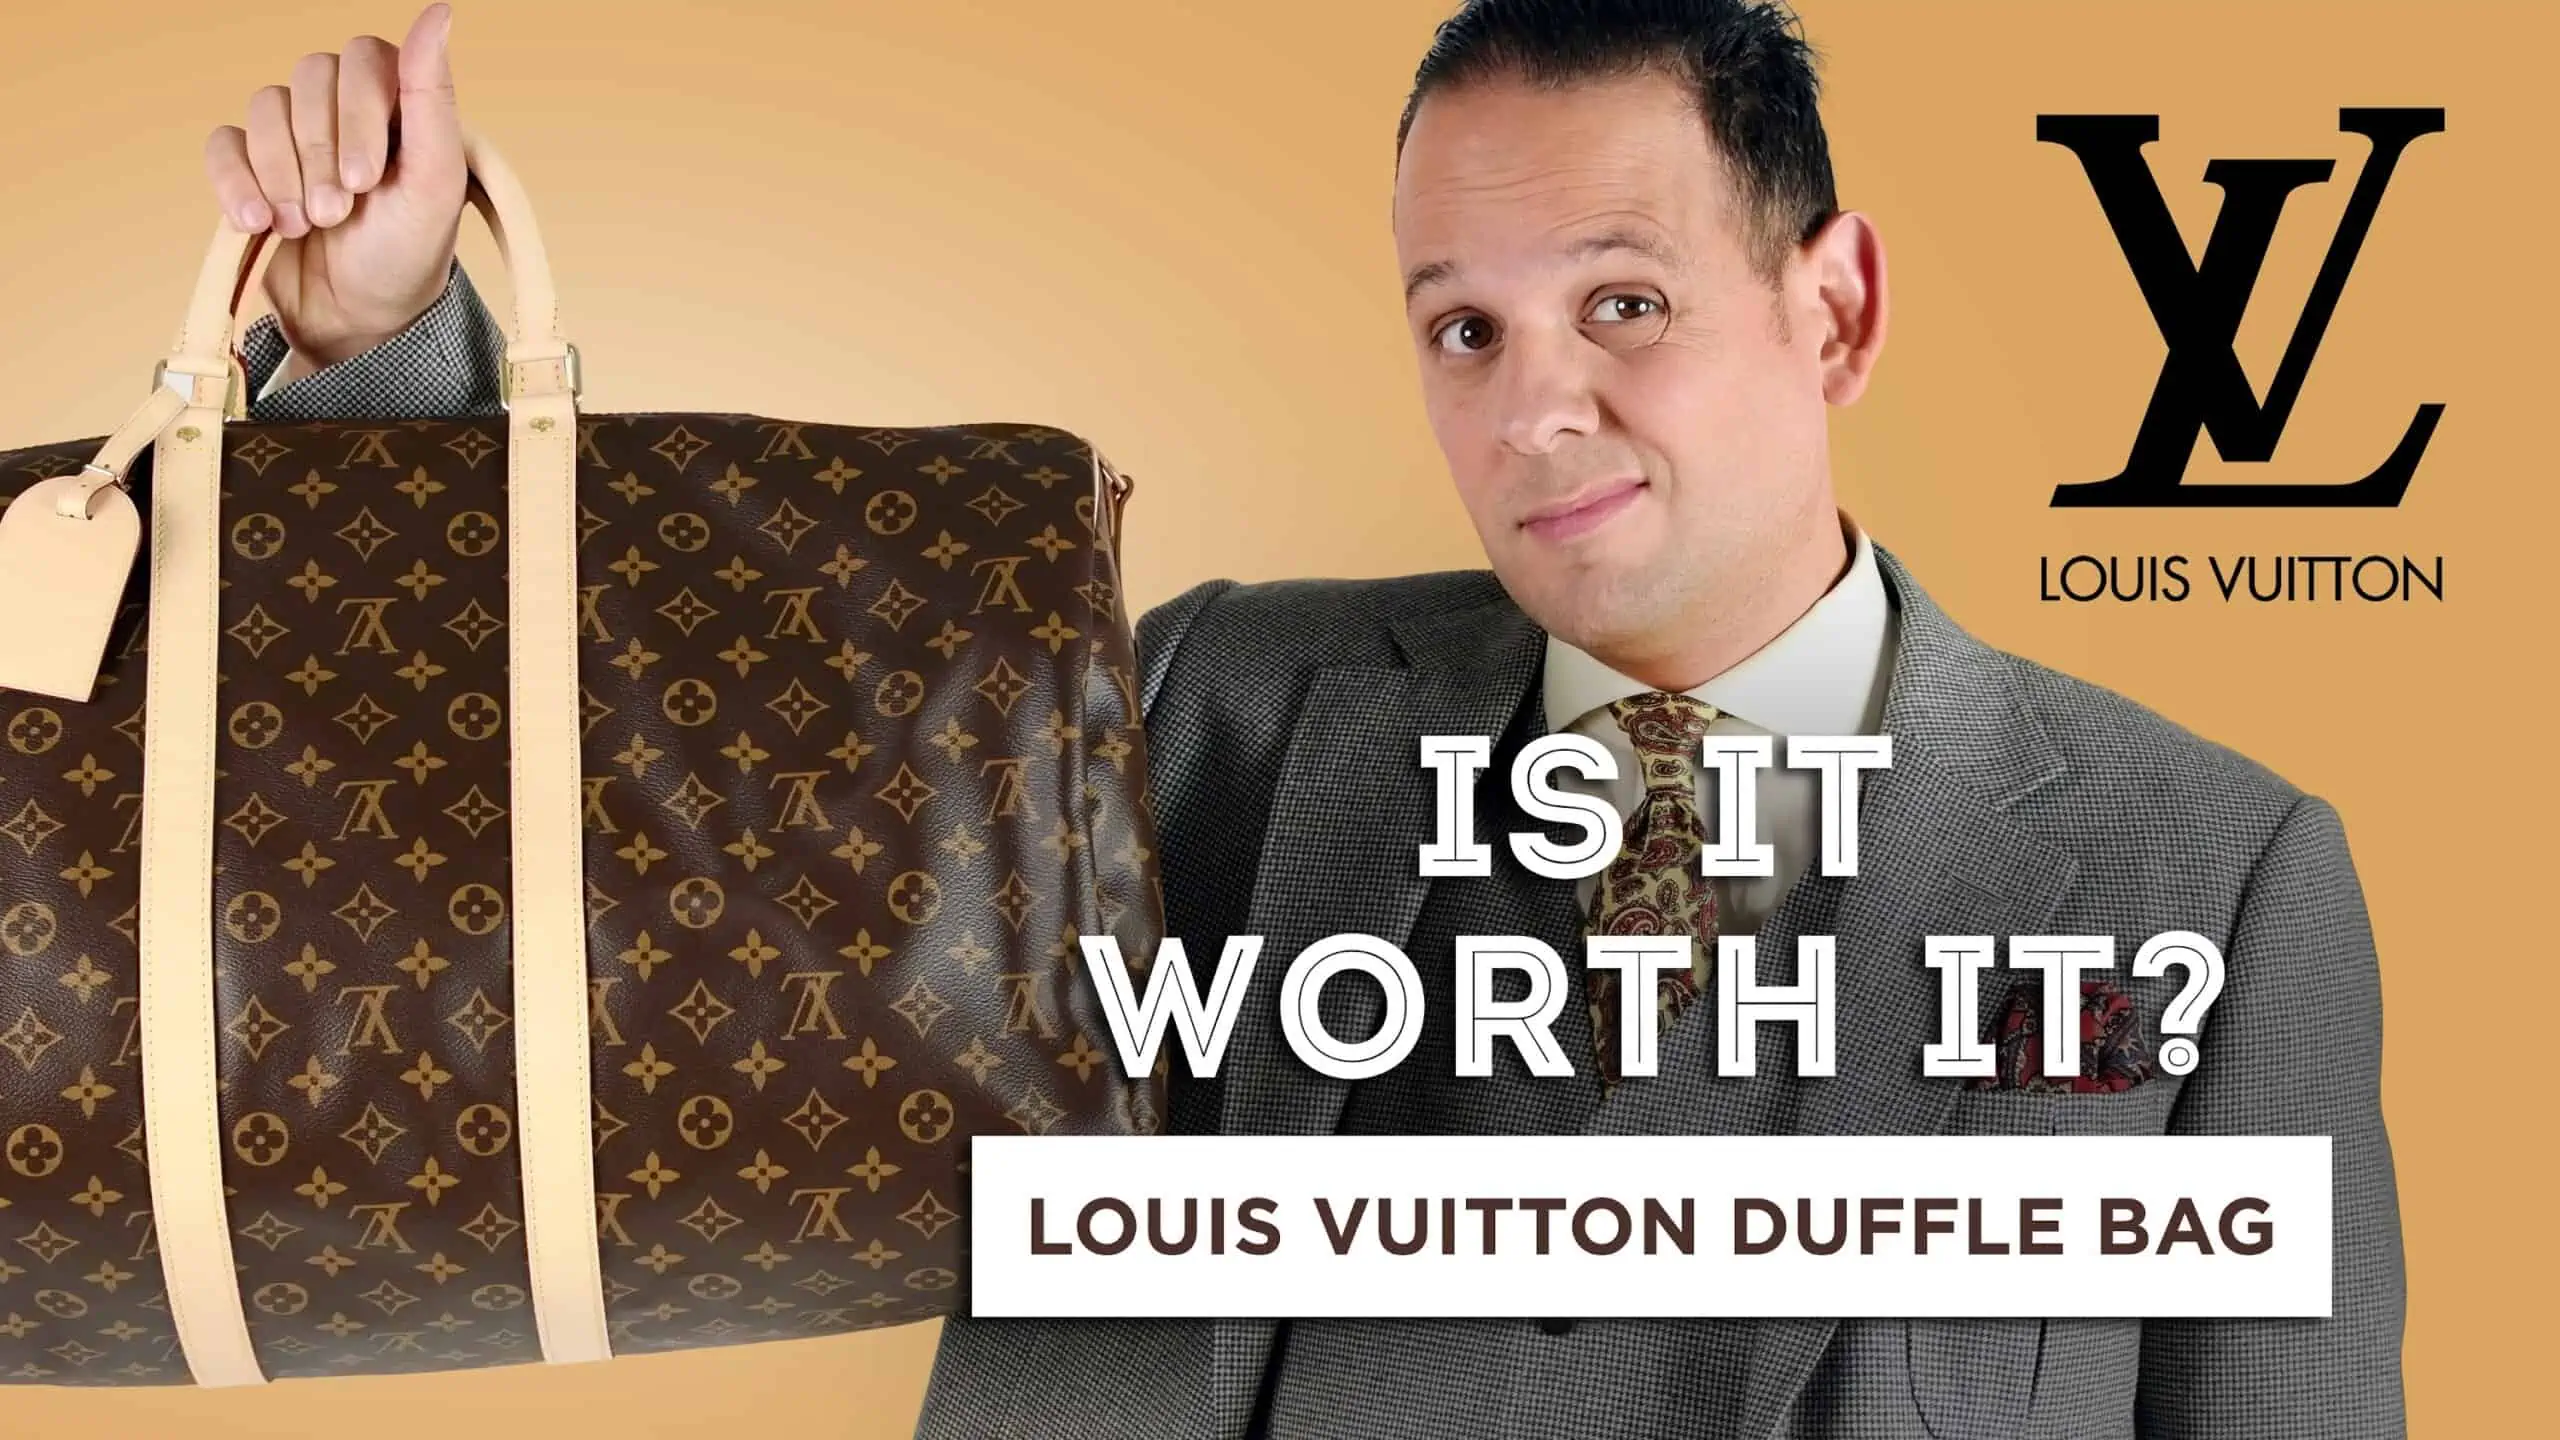 luxury lv bags